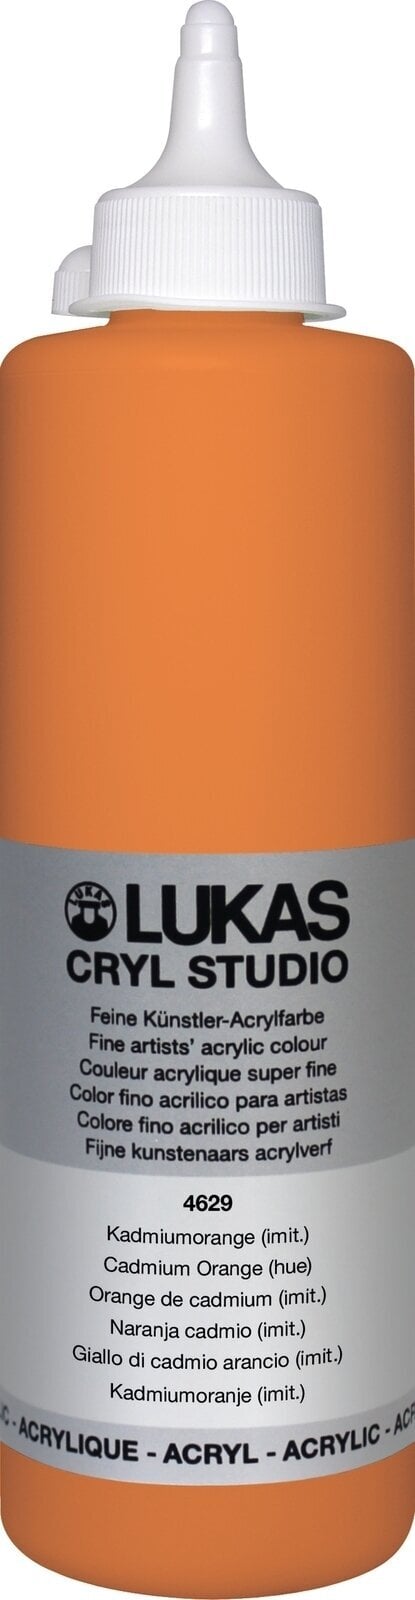 Pintura acrílica Lukas Cryl Studio Plastic Bottle Acrylic Paint Cadmium Orange Hue 500 ml 1 pc